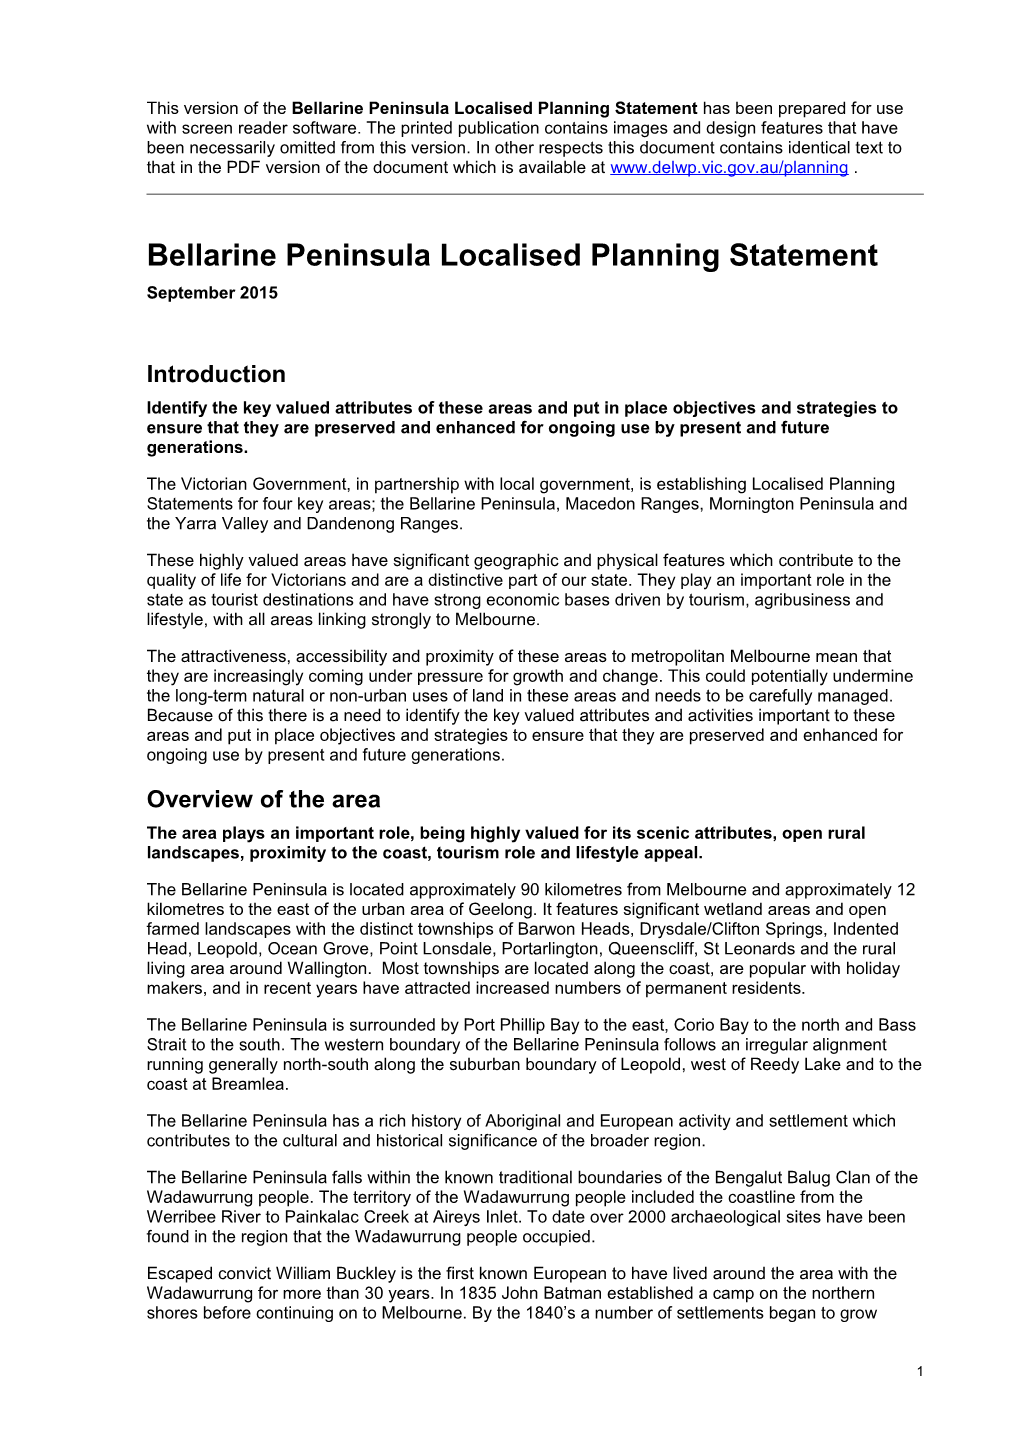 Bellarine Peninsula Localised Planning Statement Sept 2015